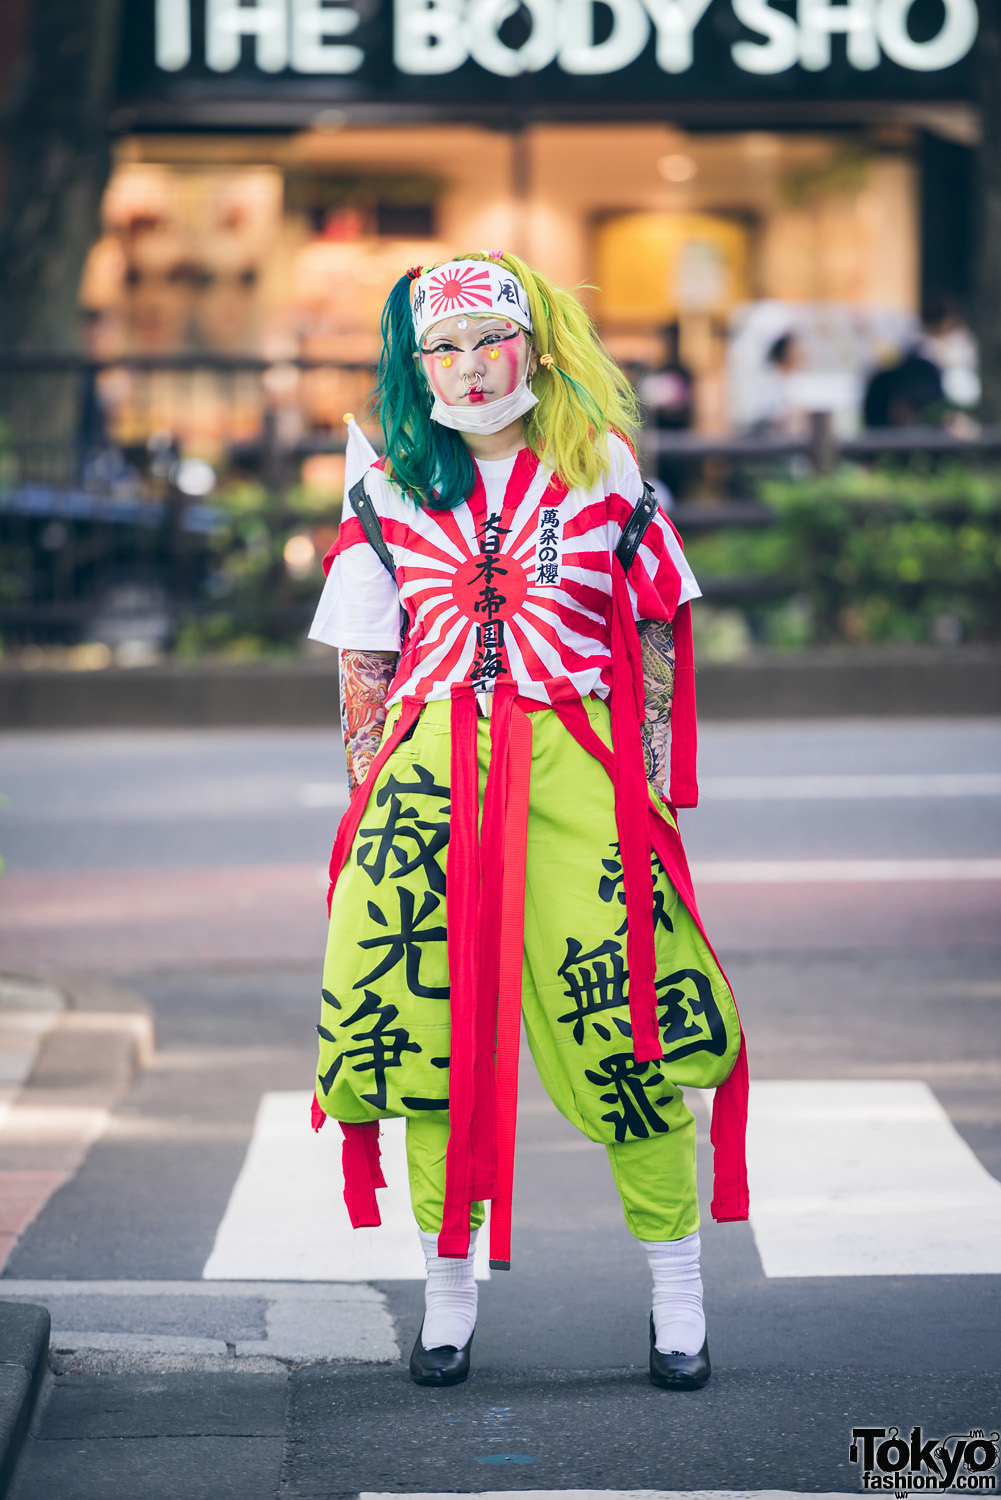 Harajuku Girl in Red & White Outfit w/ Handmade, Remake & Dog Harajuku Fashion